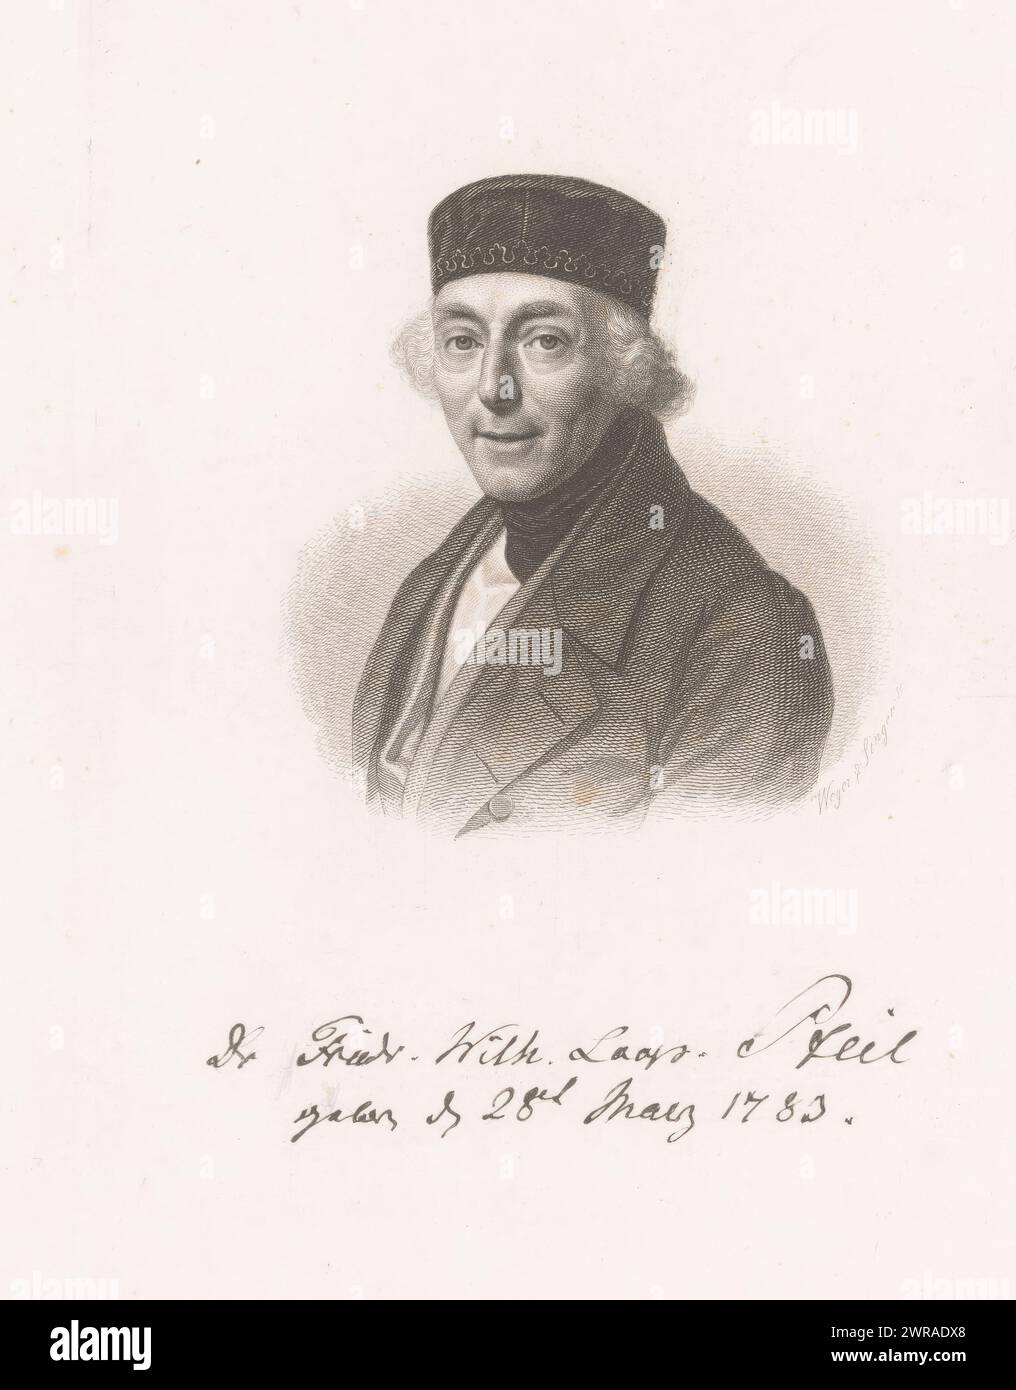 Portrait of Wilhelm Pfeil, print maker: August Weger, print maker: Johann Paul Singer, Leipzig, 1849 - 1892, paper, steel engraving, height 209 mm × width 132 mm, print Stock Photo